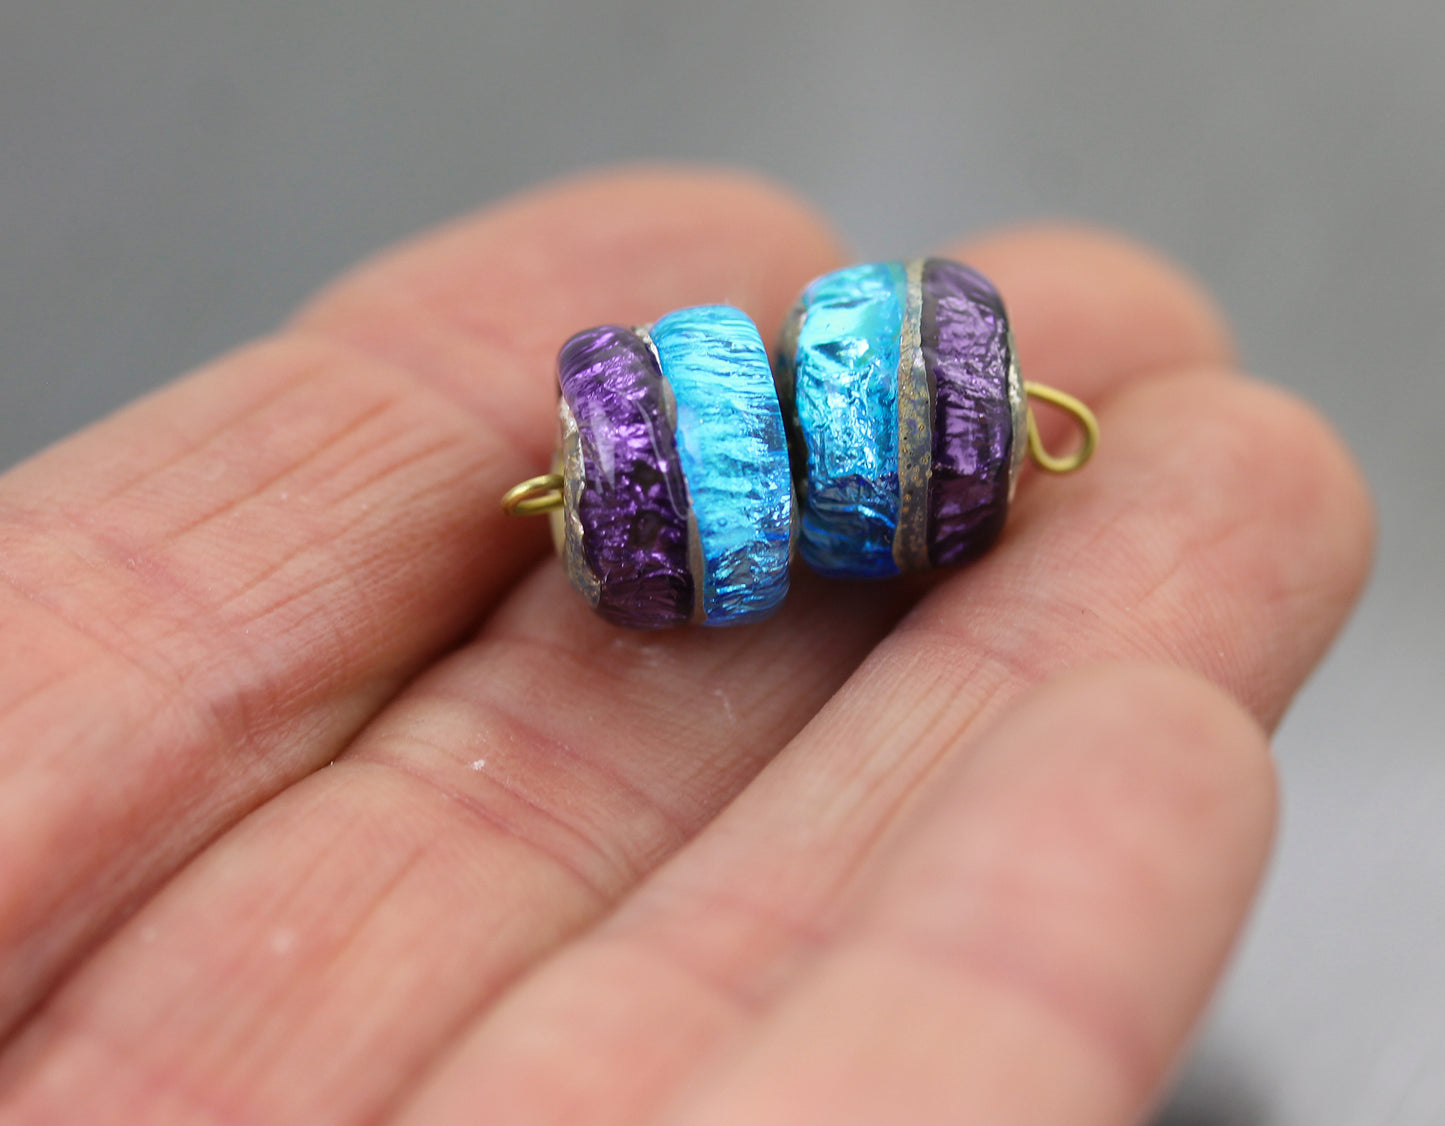 Pair of aqua & violet Sea Rocks beads #224120